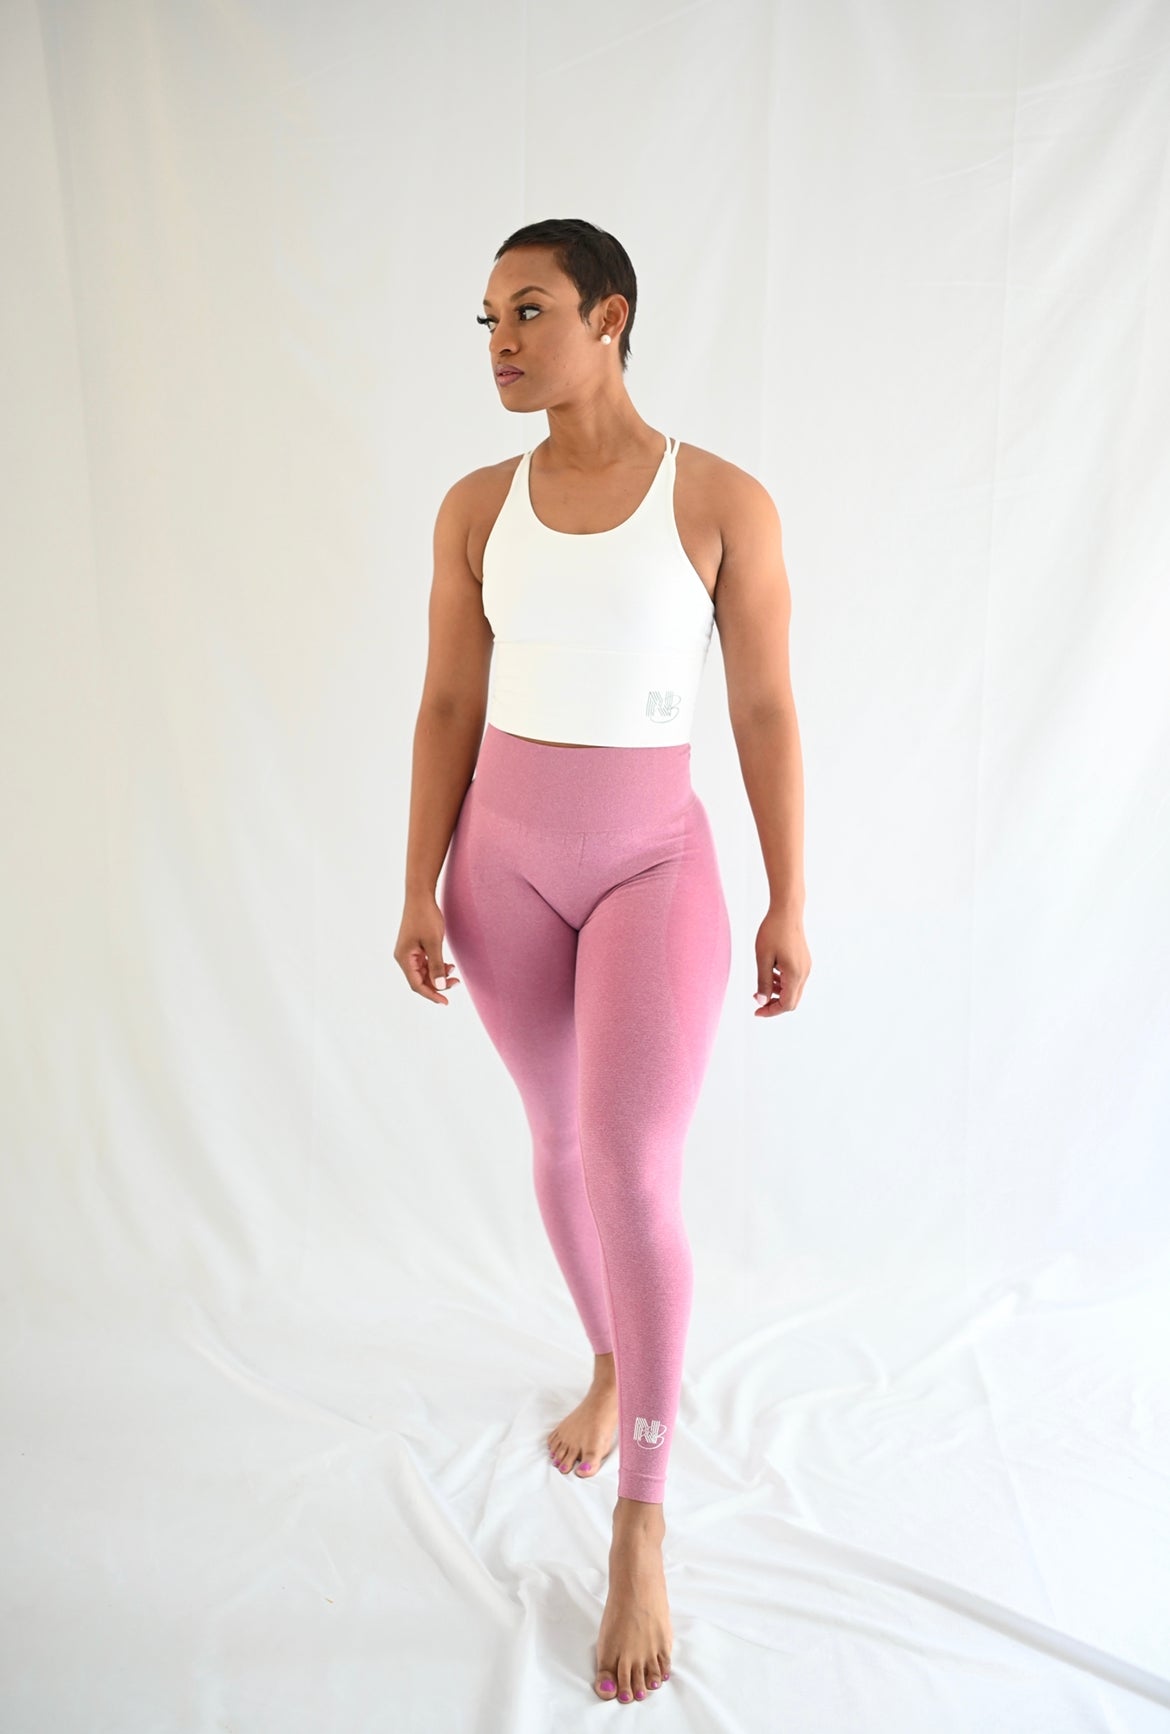 FASHION SPORTSWEAR Fila ANWEN - Leggings - Women's - shell pink